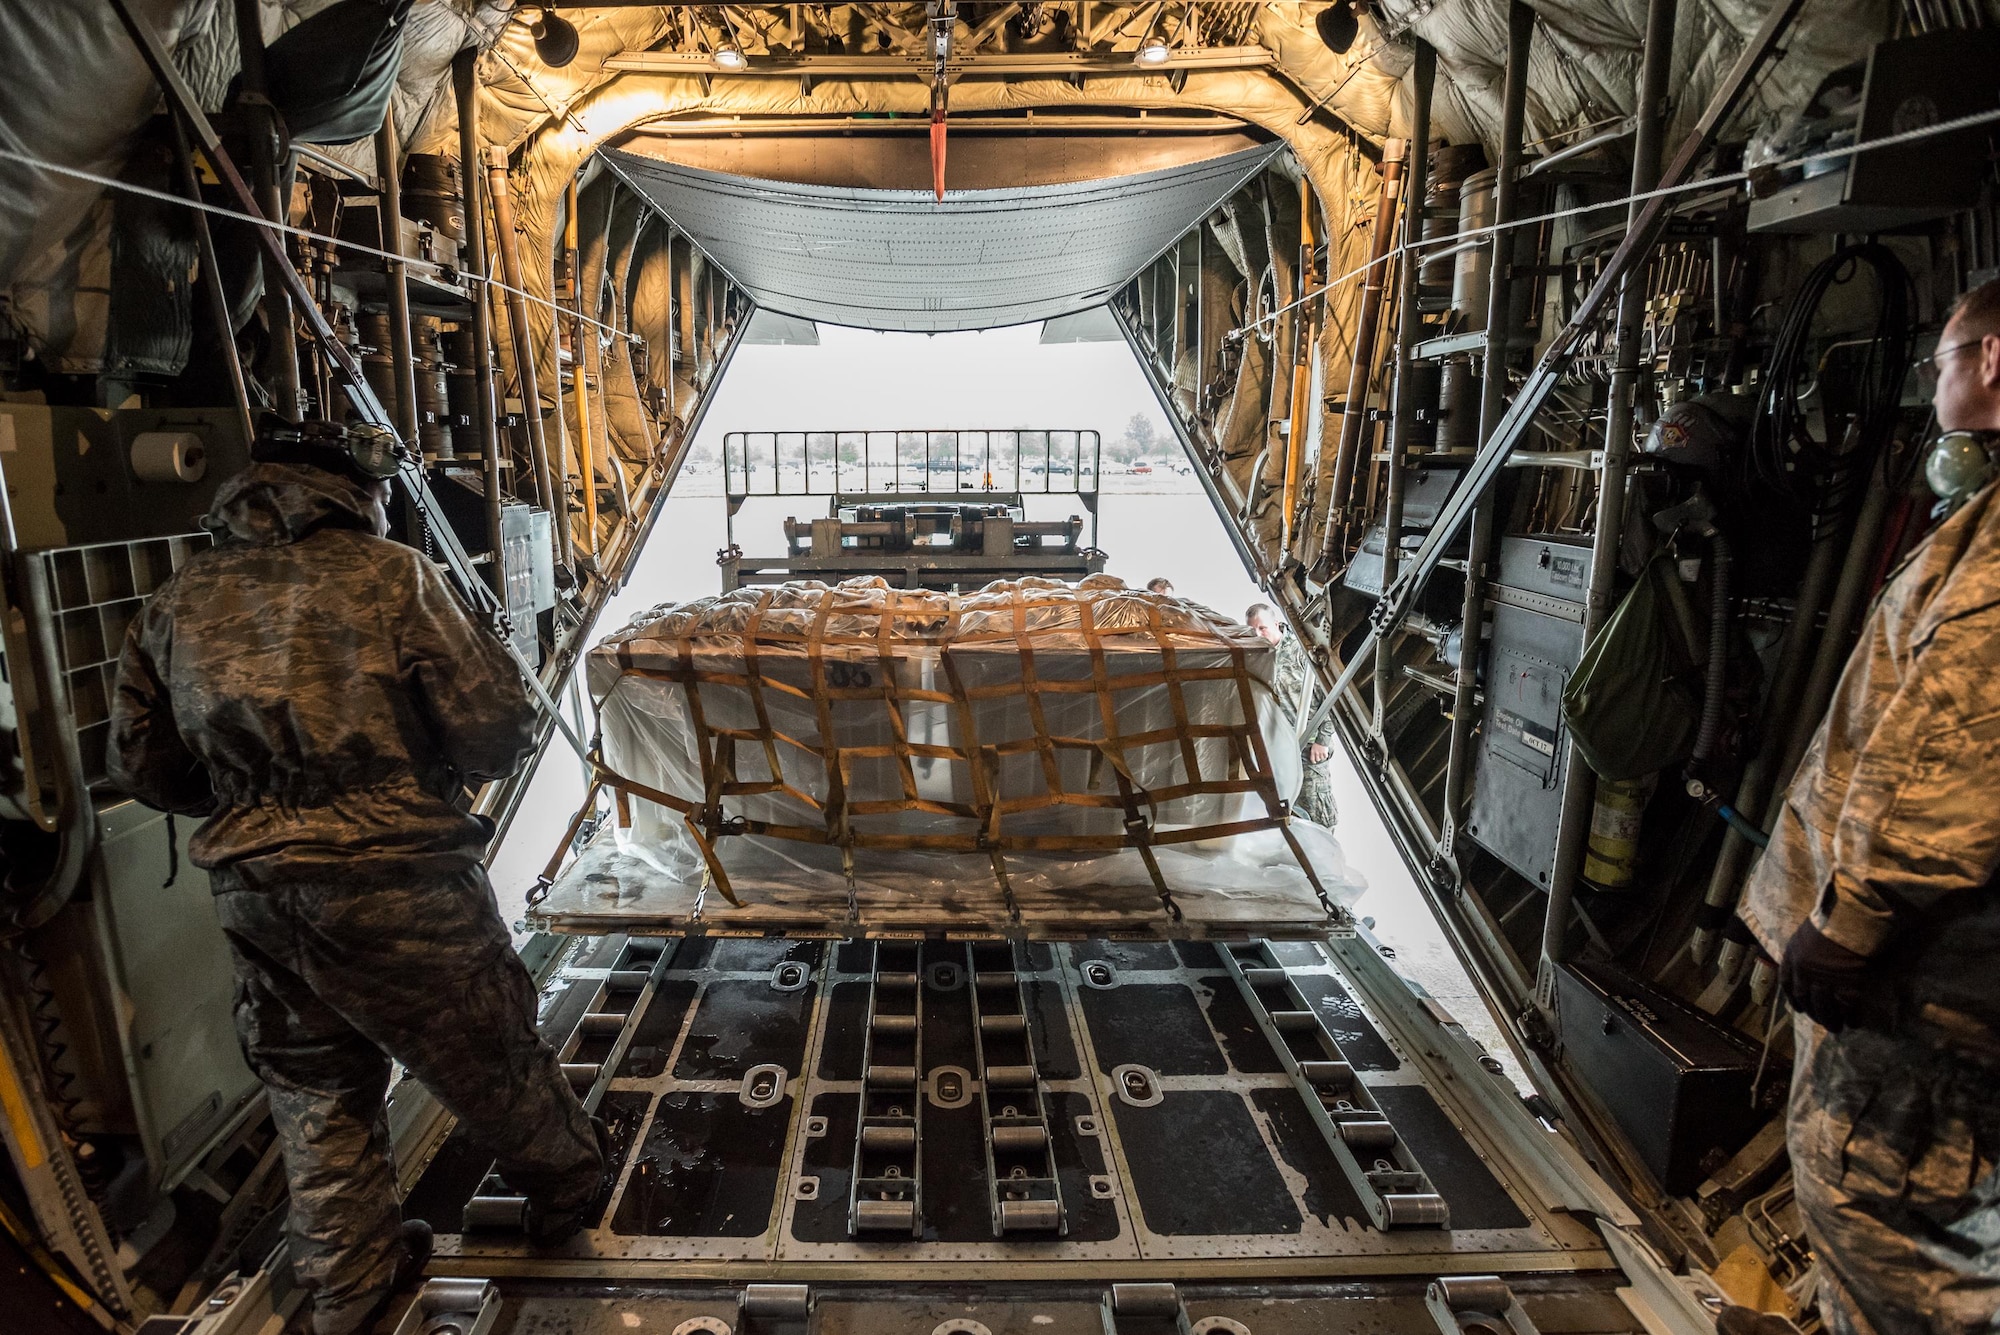 Kentucky Air Guard deploys aircraft, airmen for evacuation missions in Texas following Hurricane Harvey